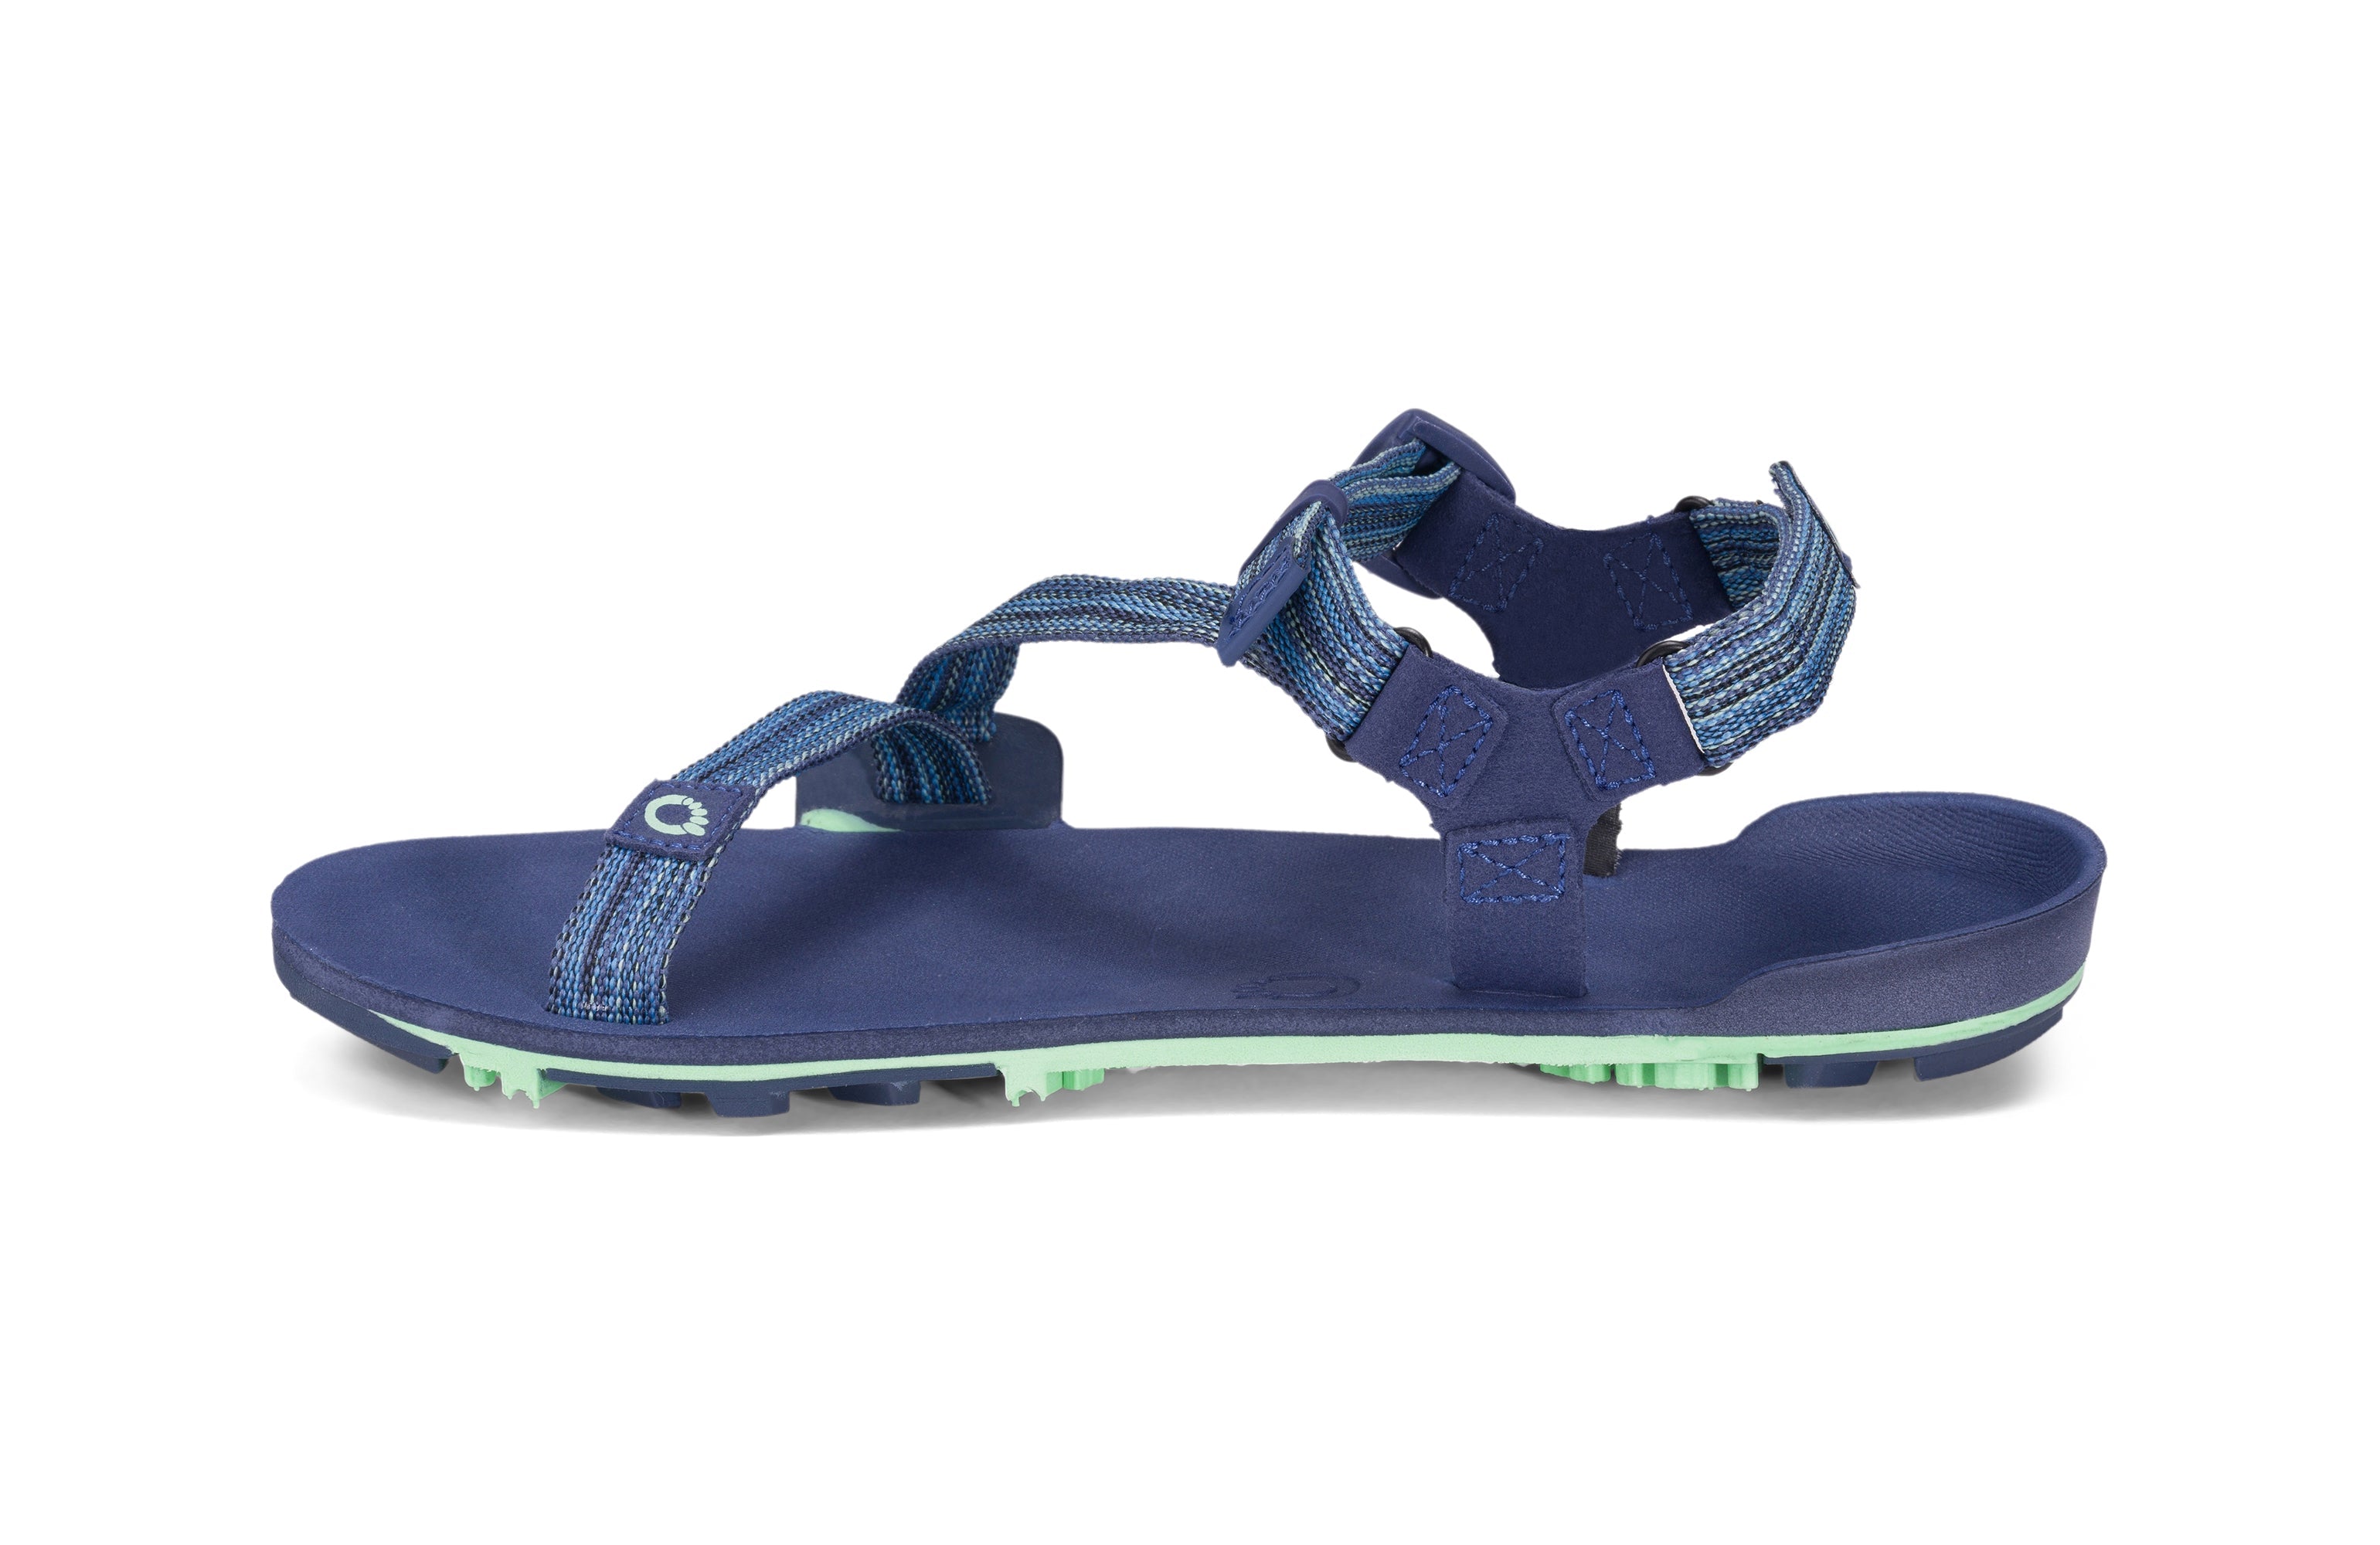 Xero Shoes Z-Trail EV Women barfods sandaler til kvinder i farven blue indigo, inderside